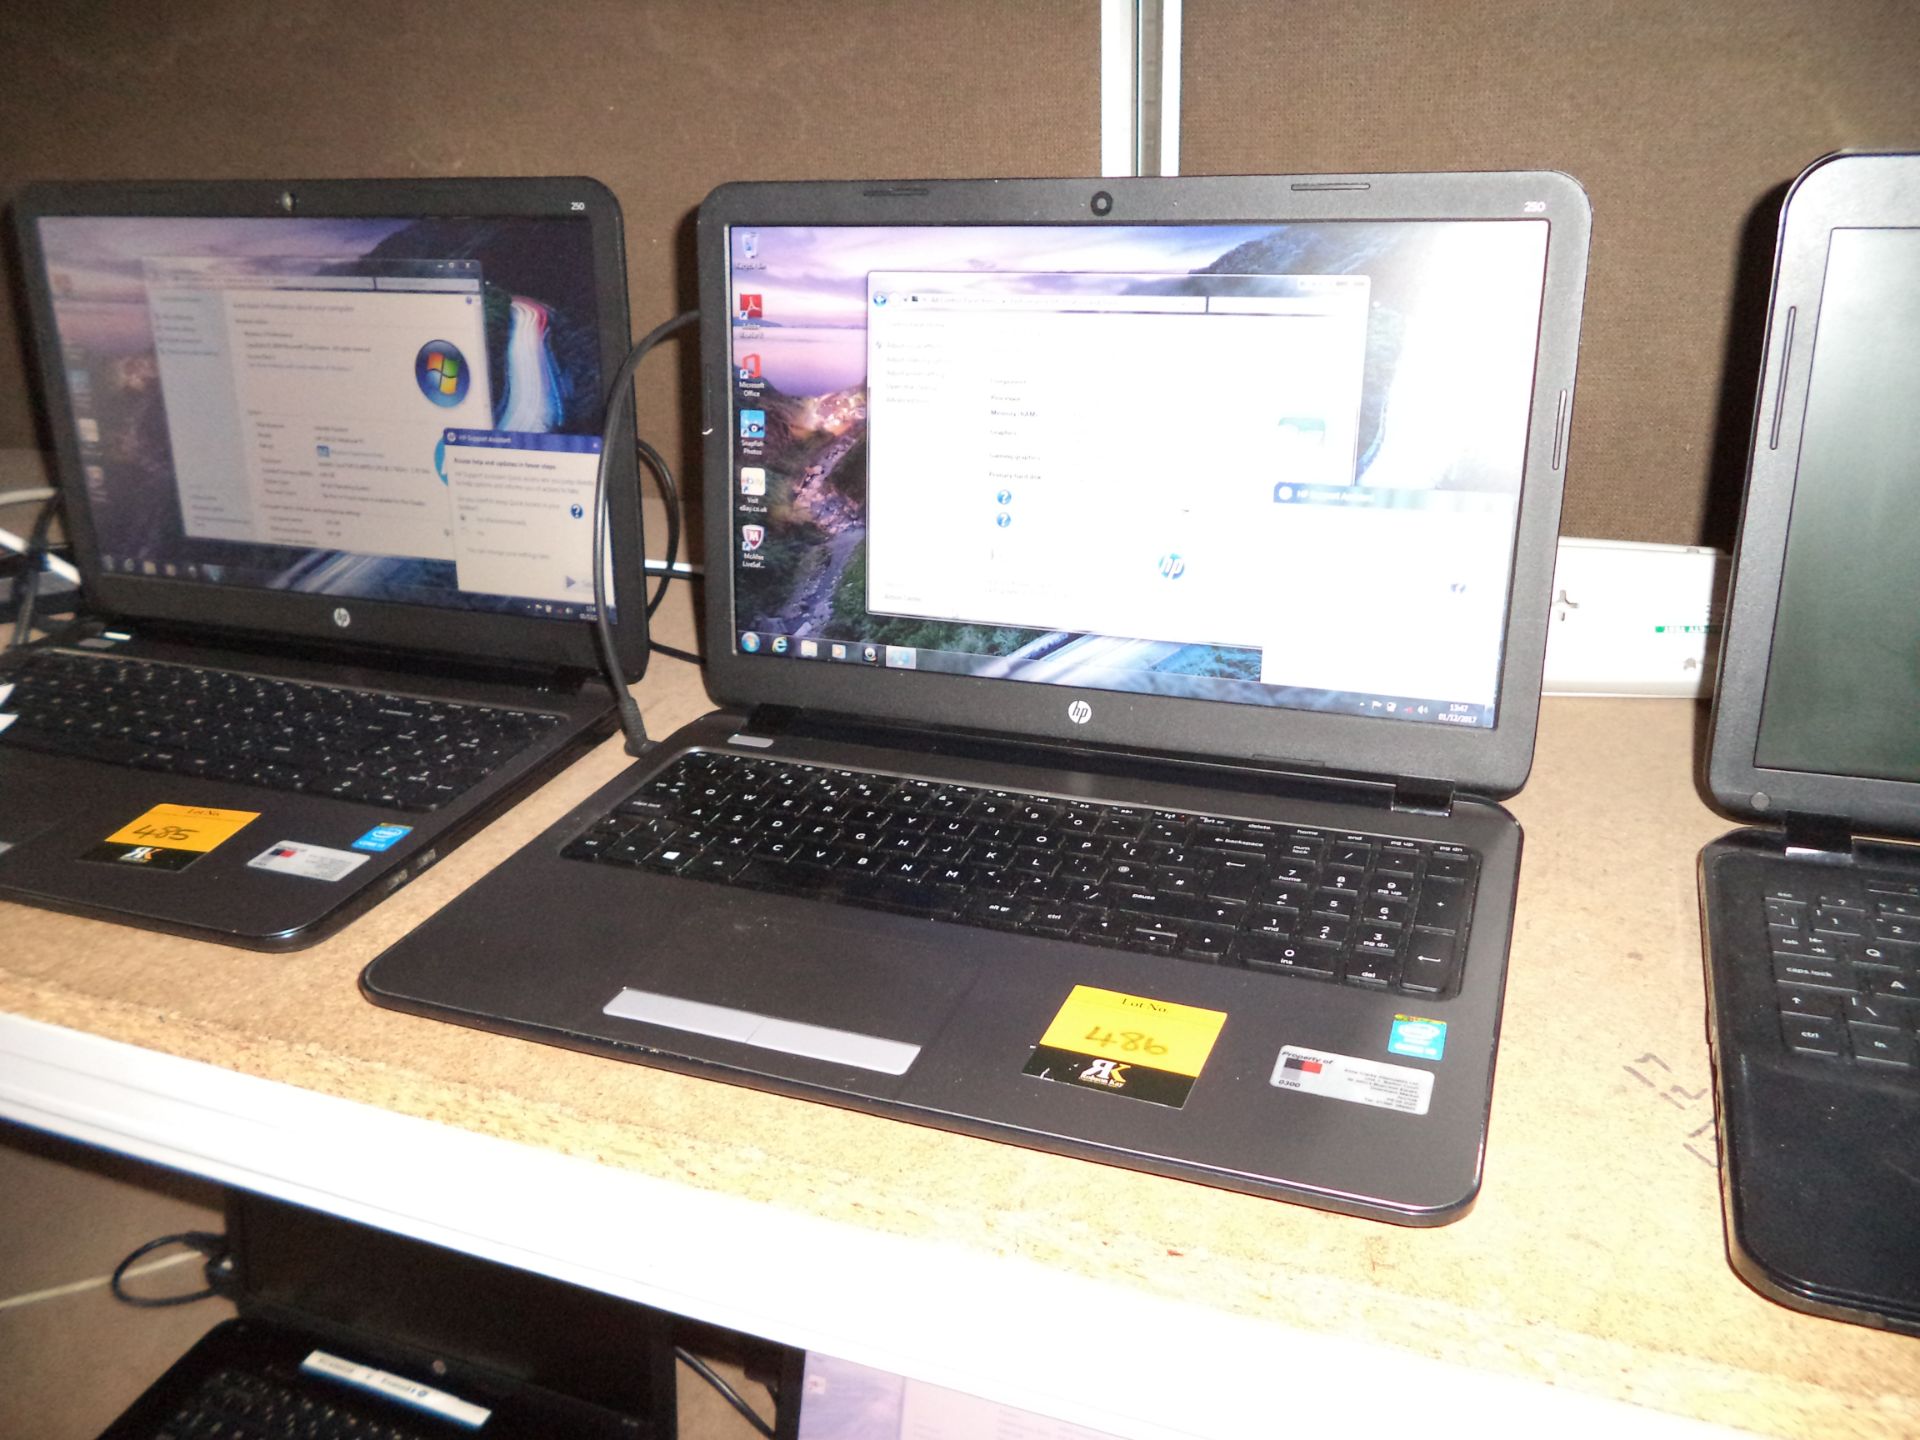 HP ProBook 250 G3 notebook computer with 15.6" widescreen display & built-in webcam, core i3-4005U - Image 2 of 3